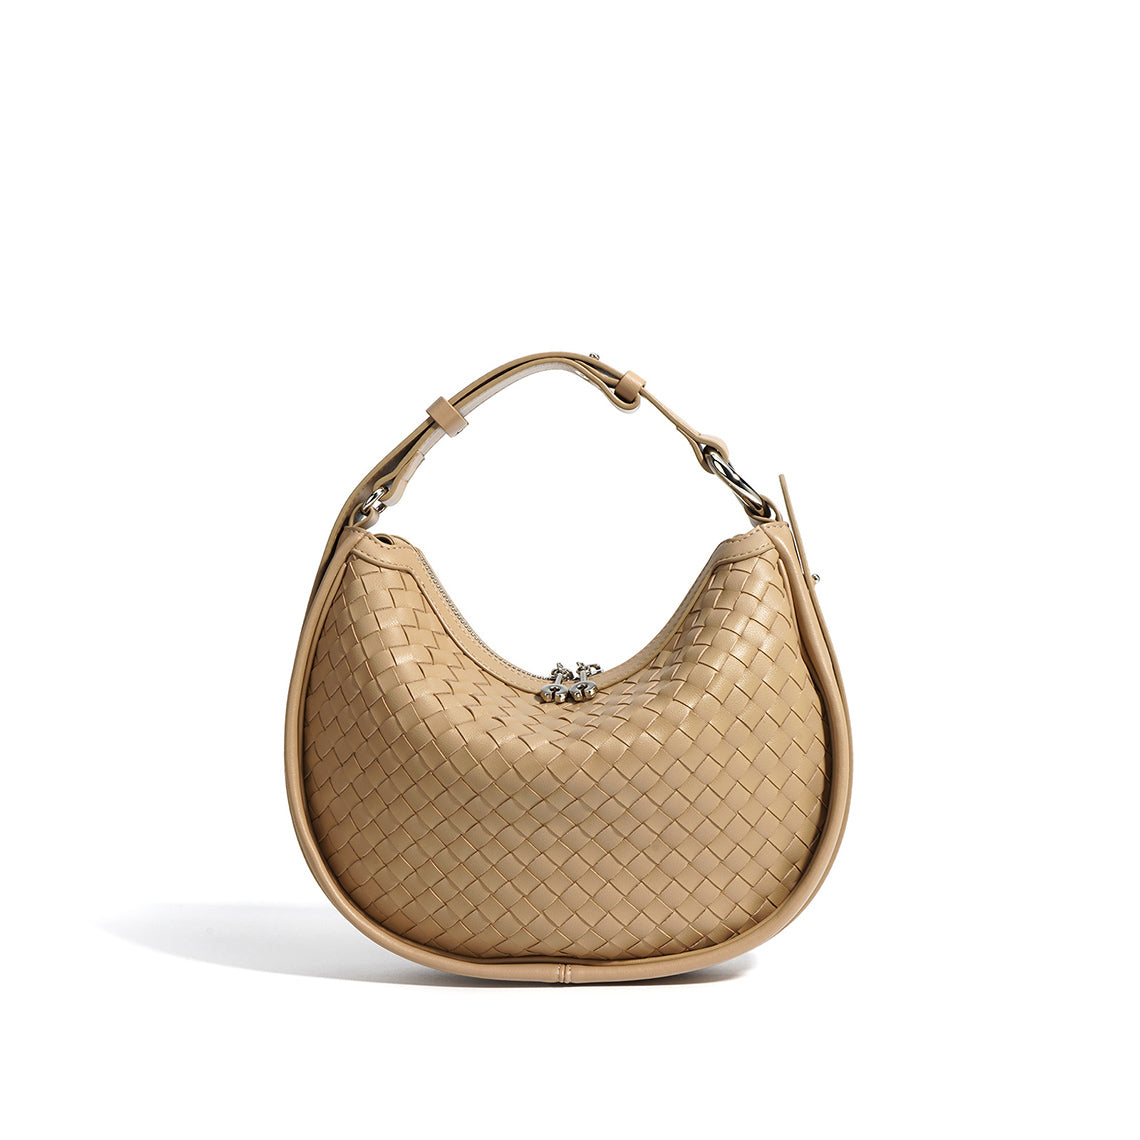 Apricot Leather Woven Leather Handbag Crossbody Bag for Women